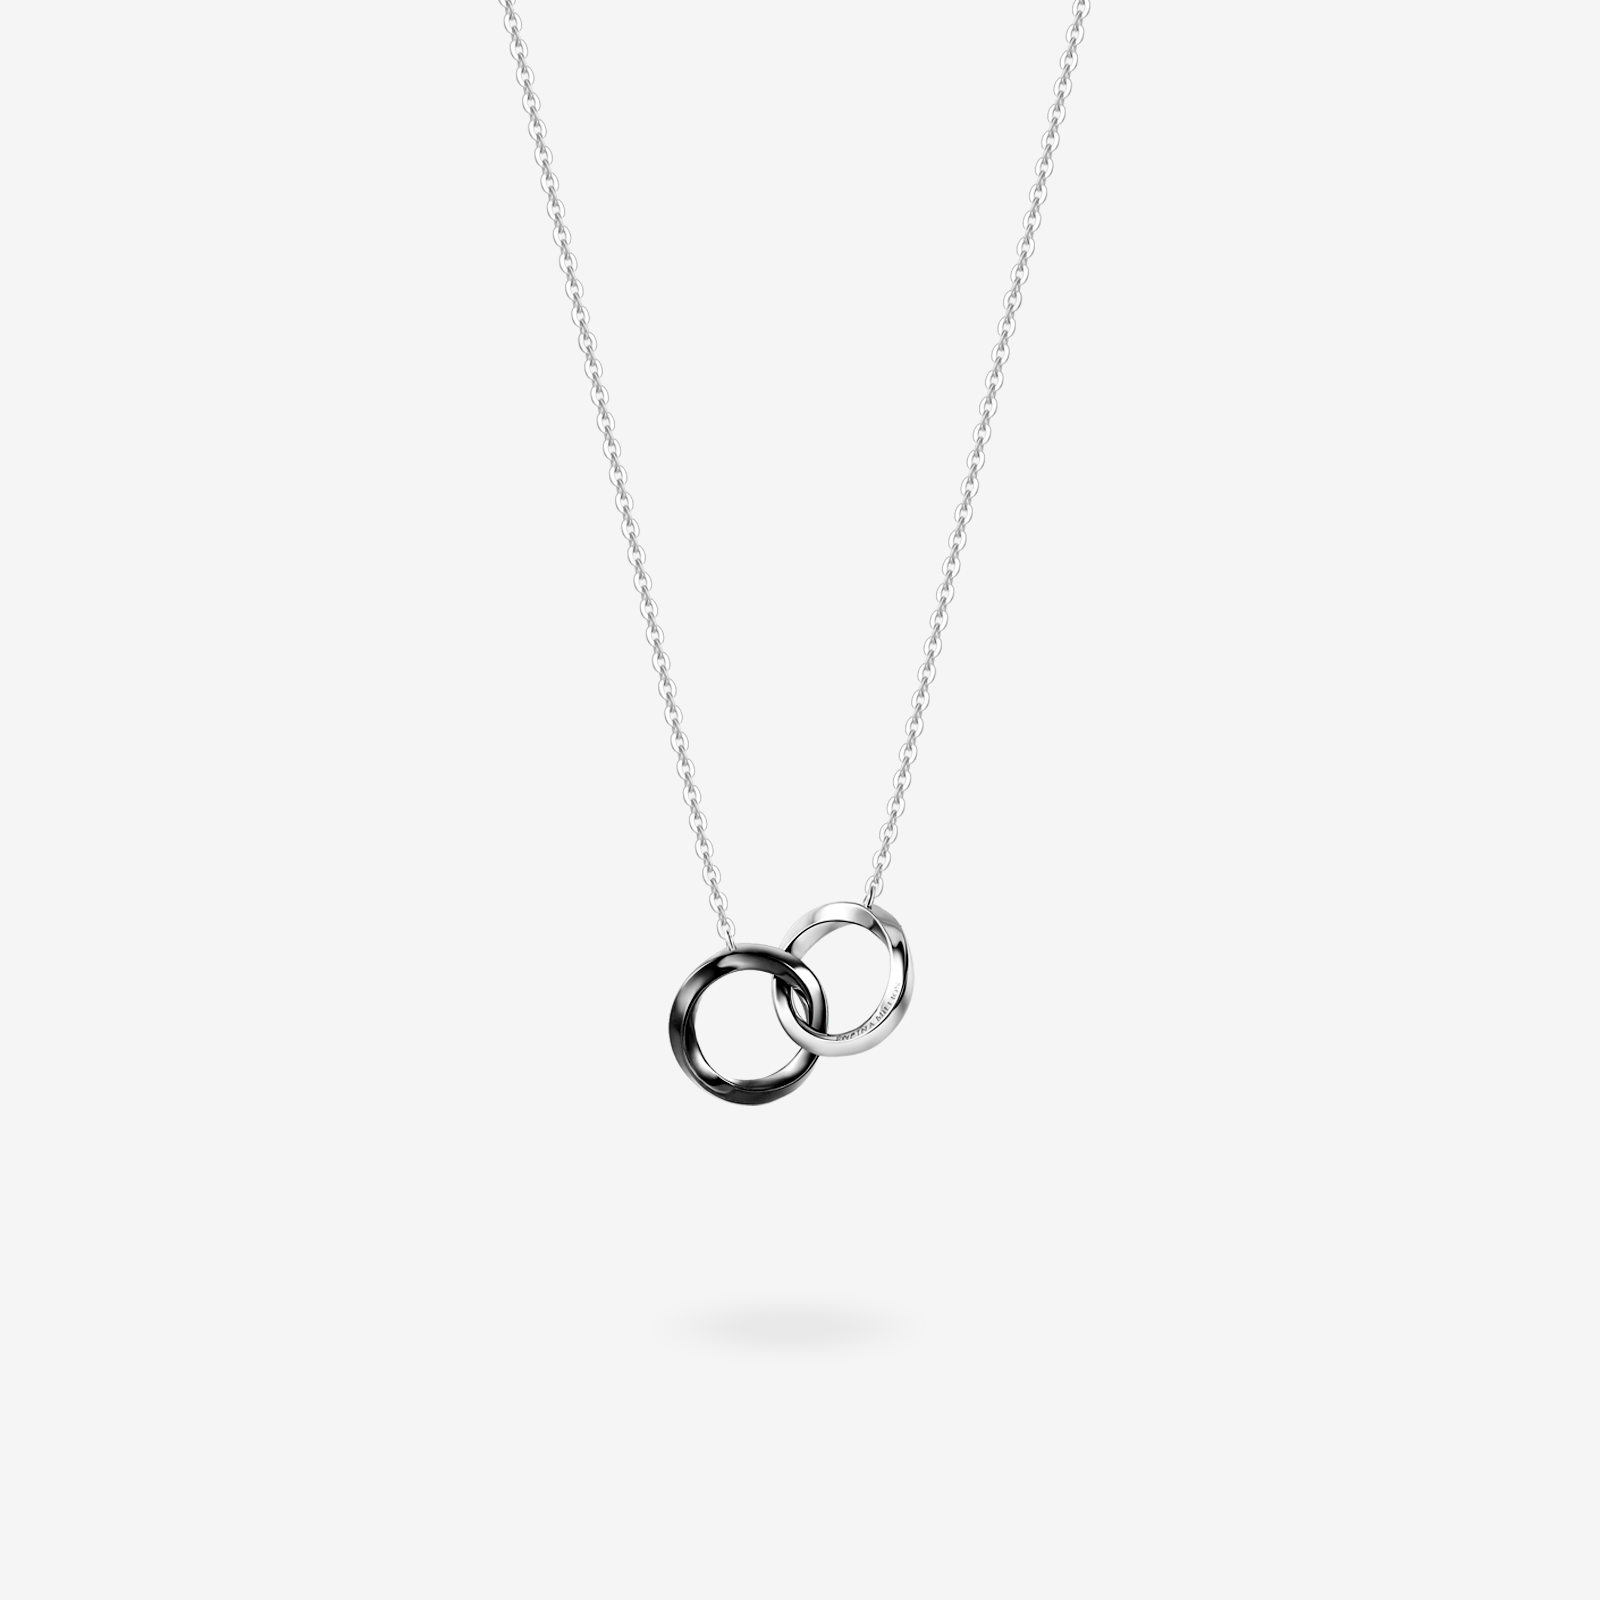 FANCIME "Together" Interlocking Ring Sterling Silver Necklace